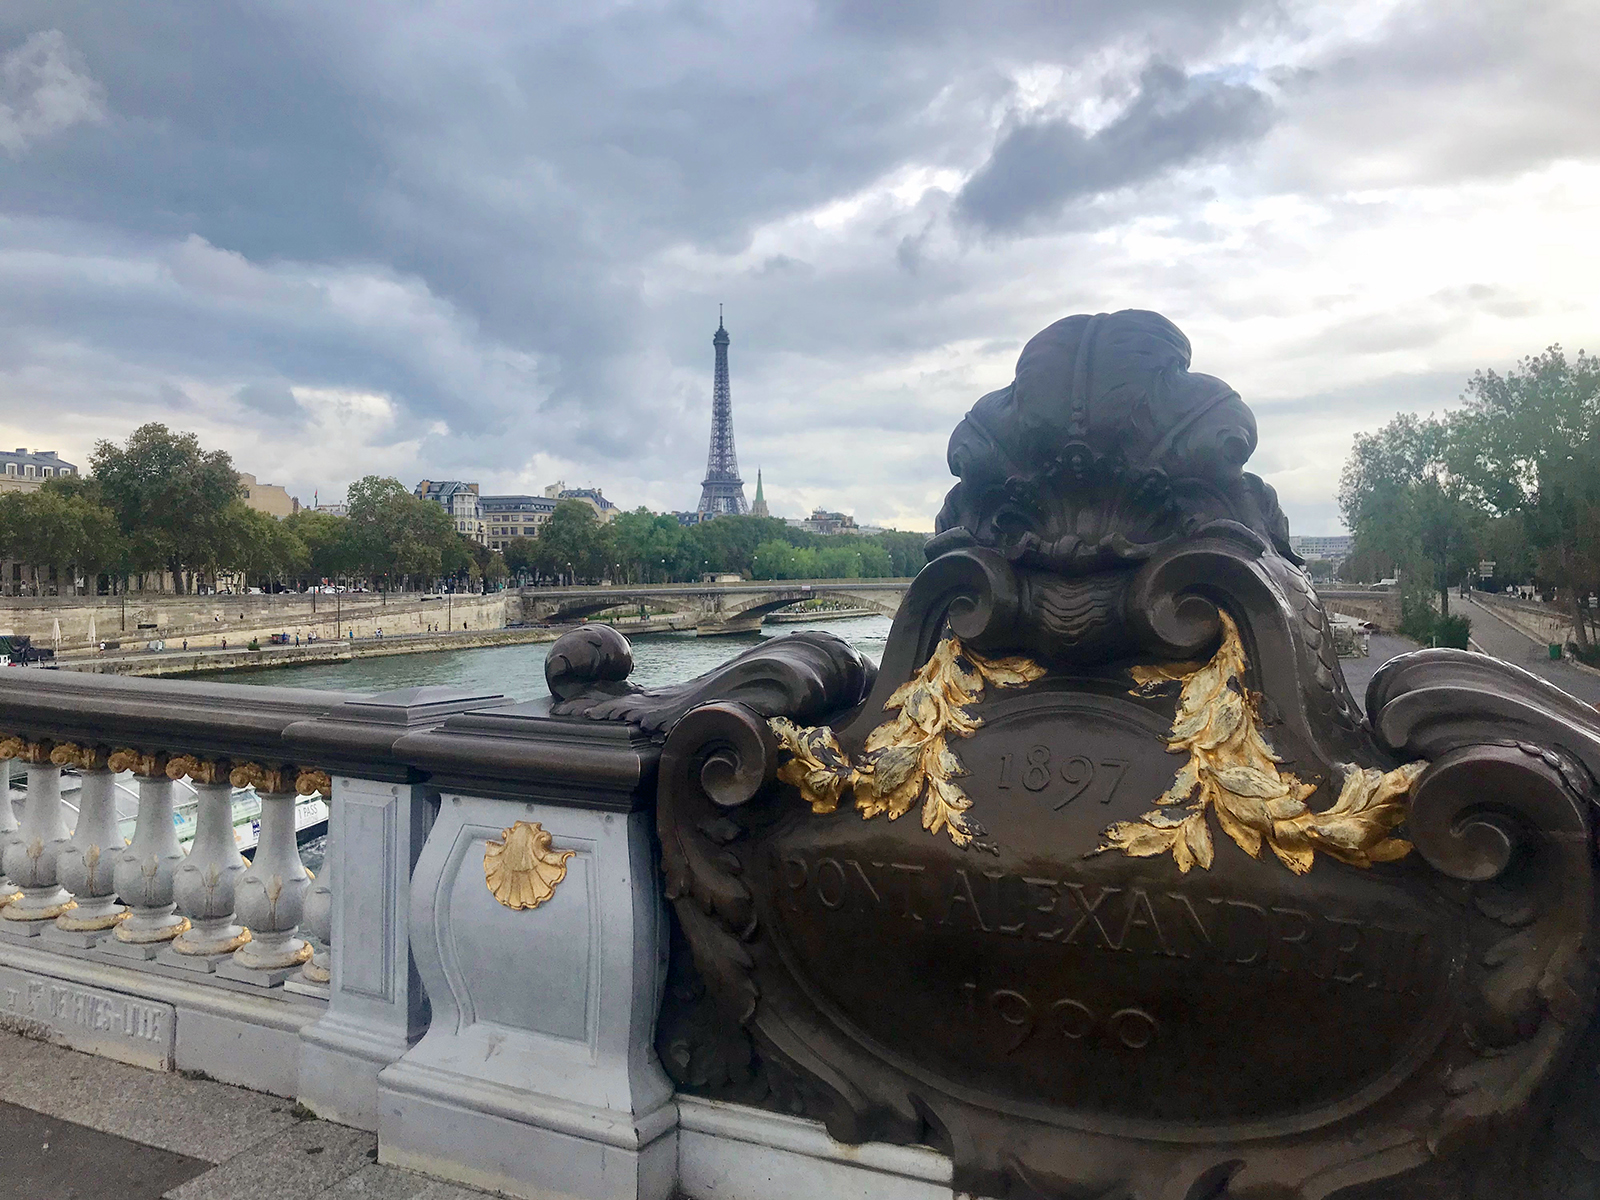 Drehorte Emily in Paris: 23 Orte, wo die Netflix-Serie „Emily in Paris“ gedreht wurde